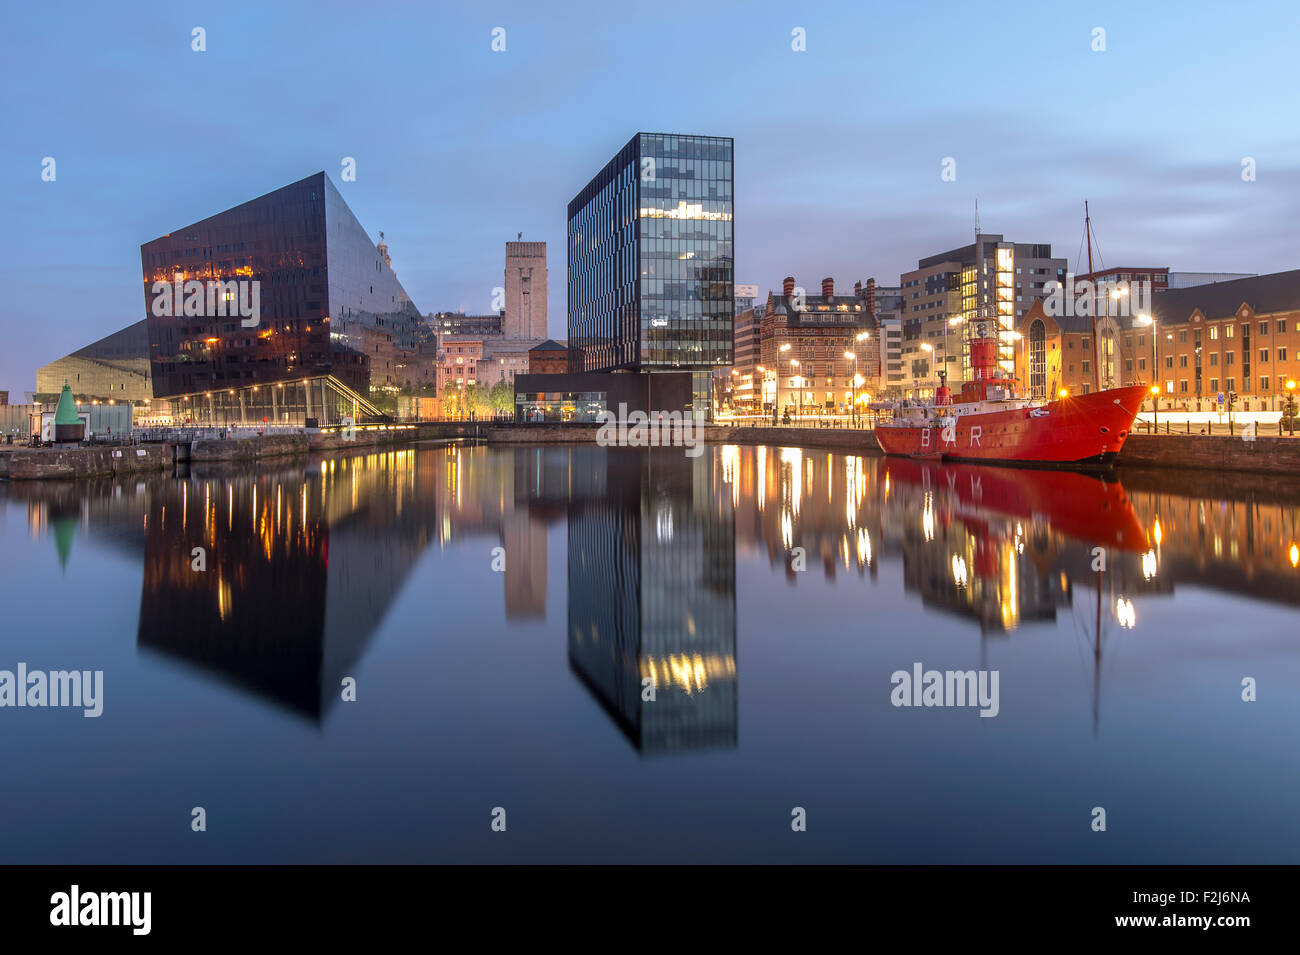 Mann Island, The Mersey Bar Lightship & Waterfront Buildings, Canning Dock, Liverpool, Merseyside. UK Stock Photo